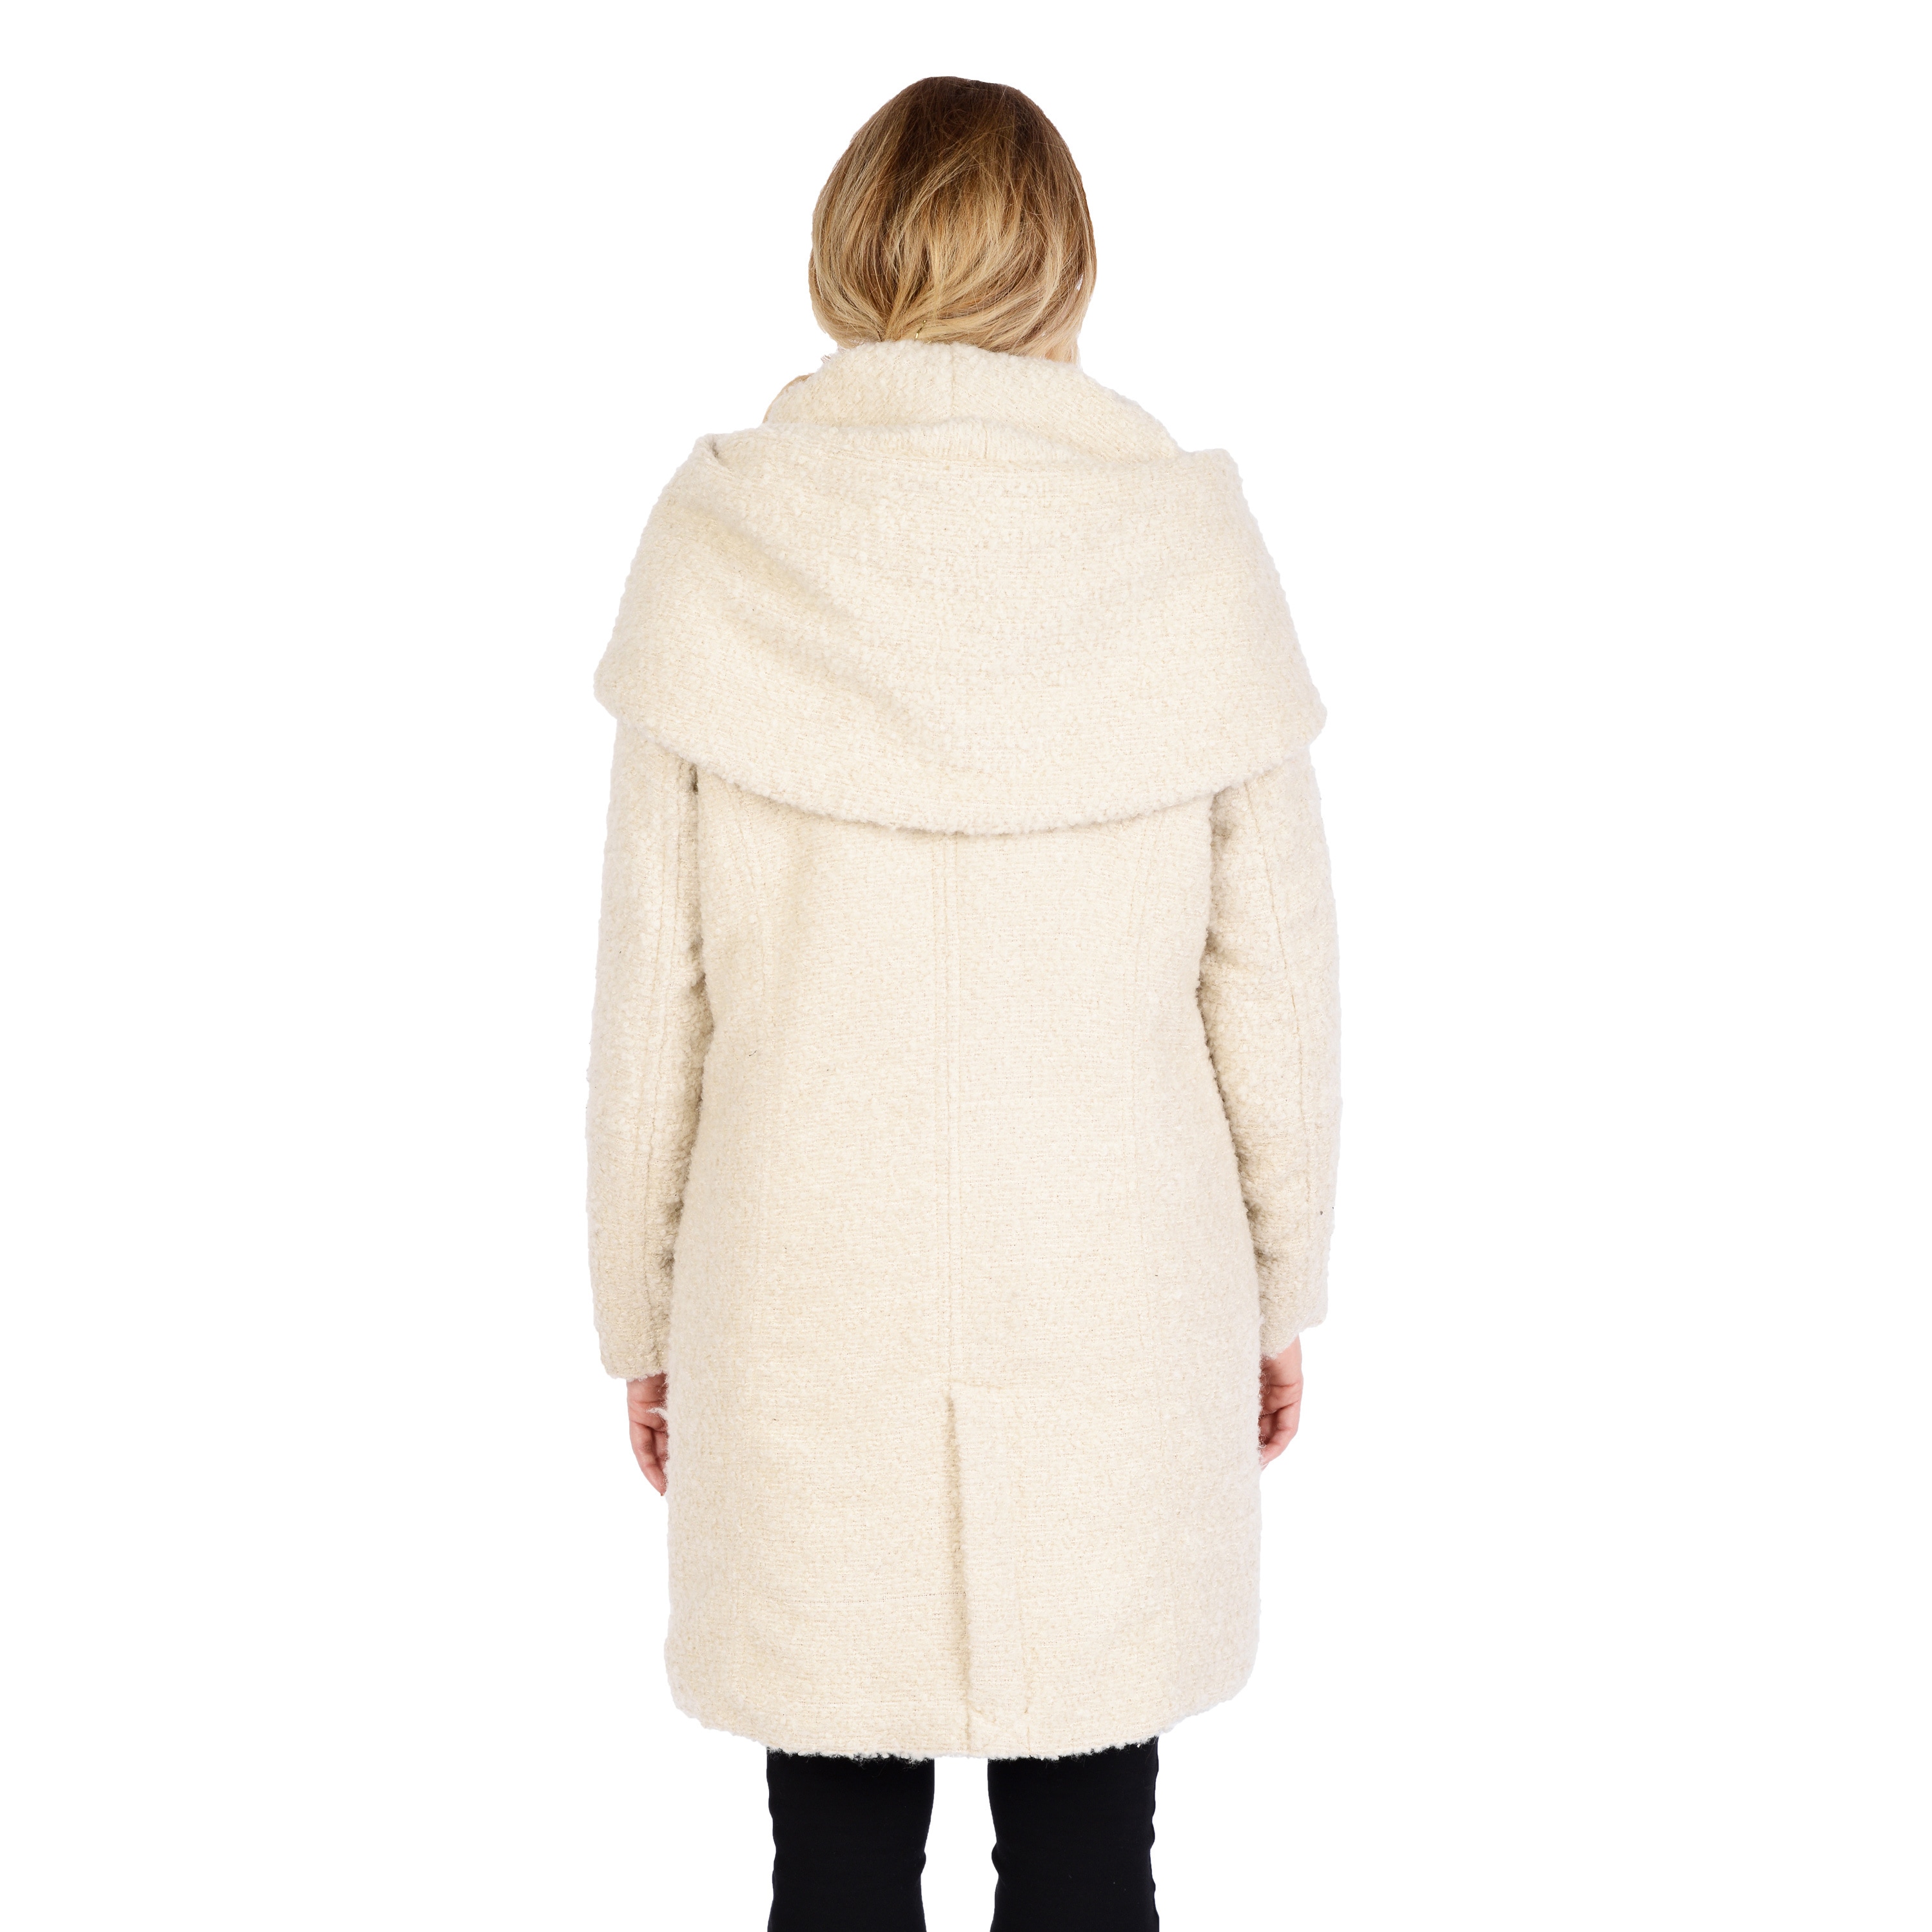 women's coat with oversized hood